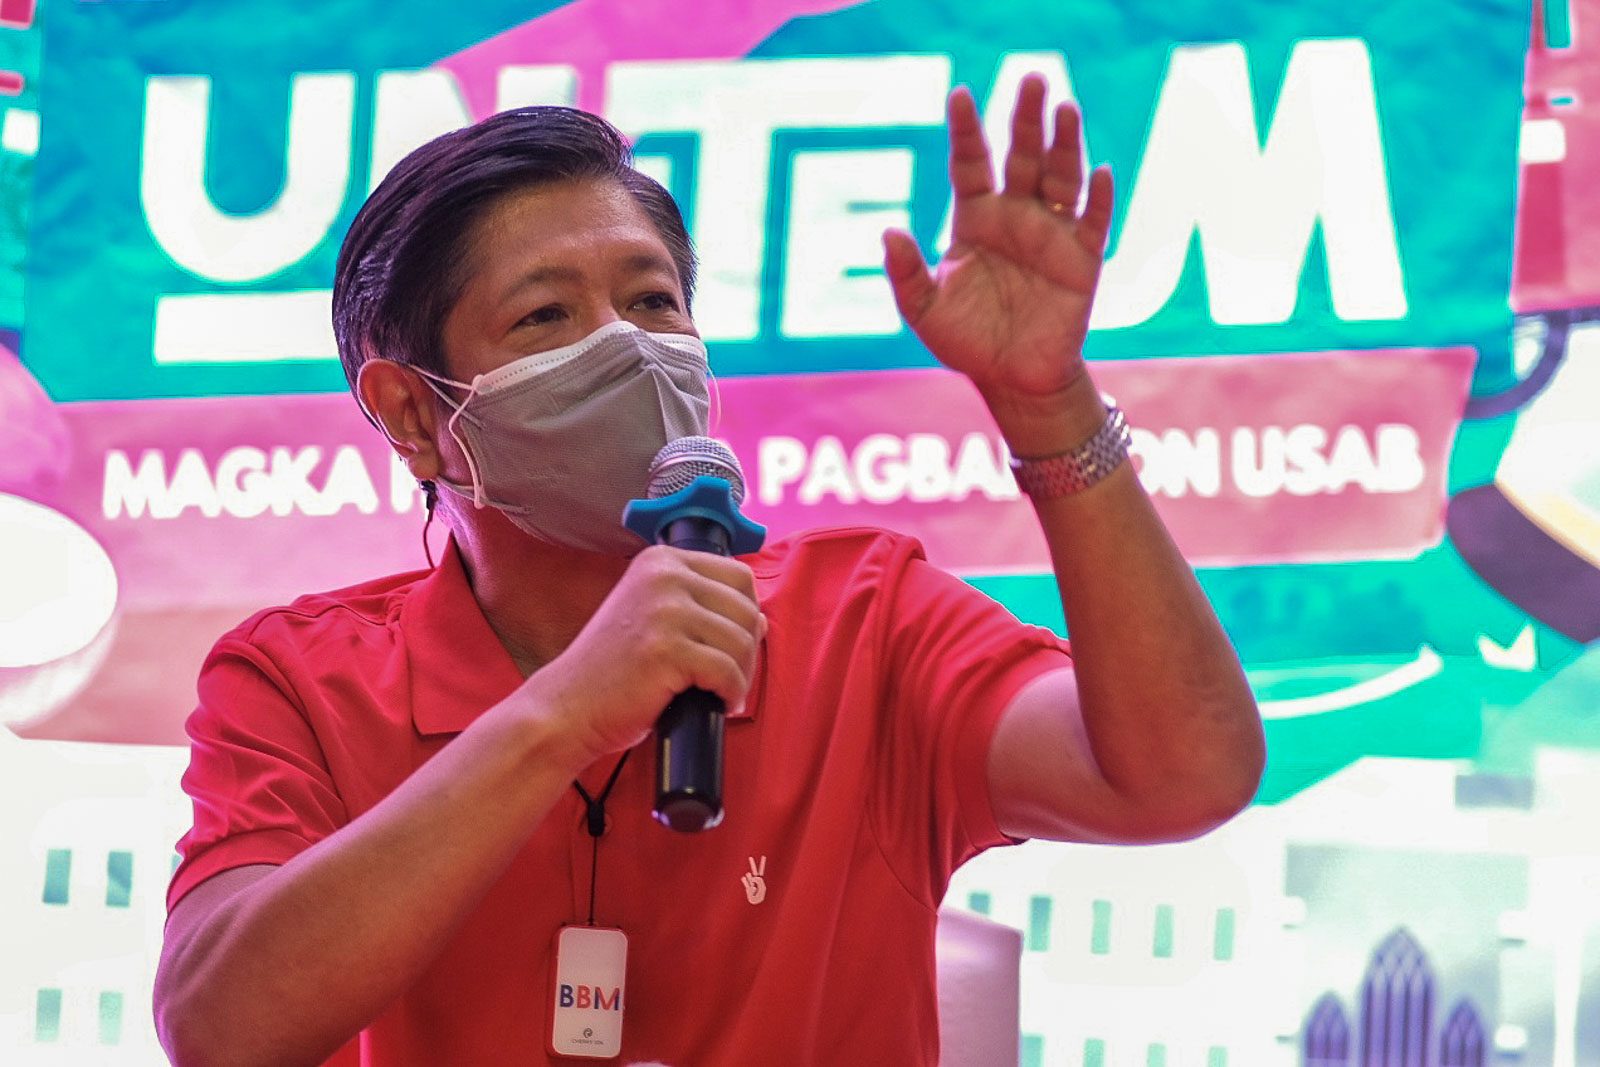 Marcos faces media: CDO presser controlled, CNN skips estate tax issue